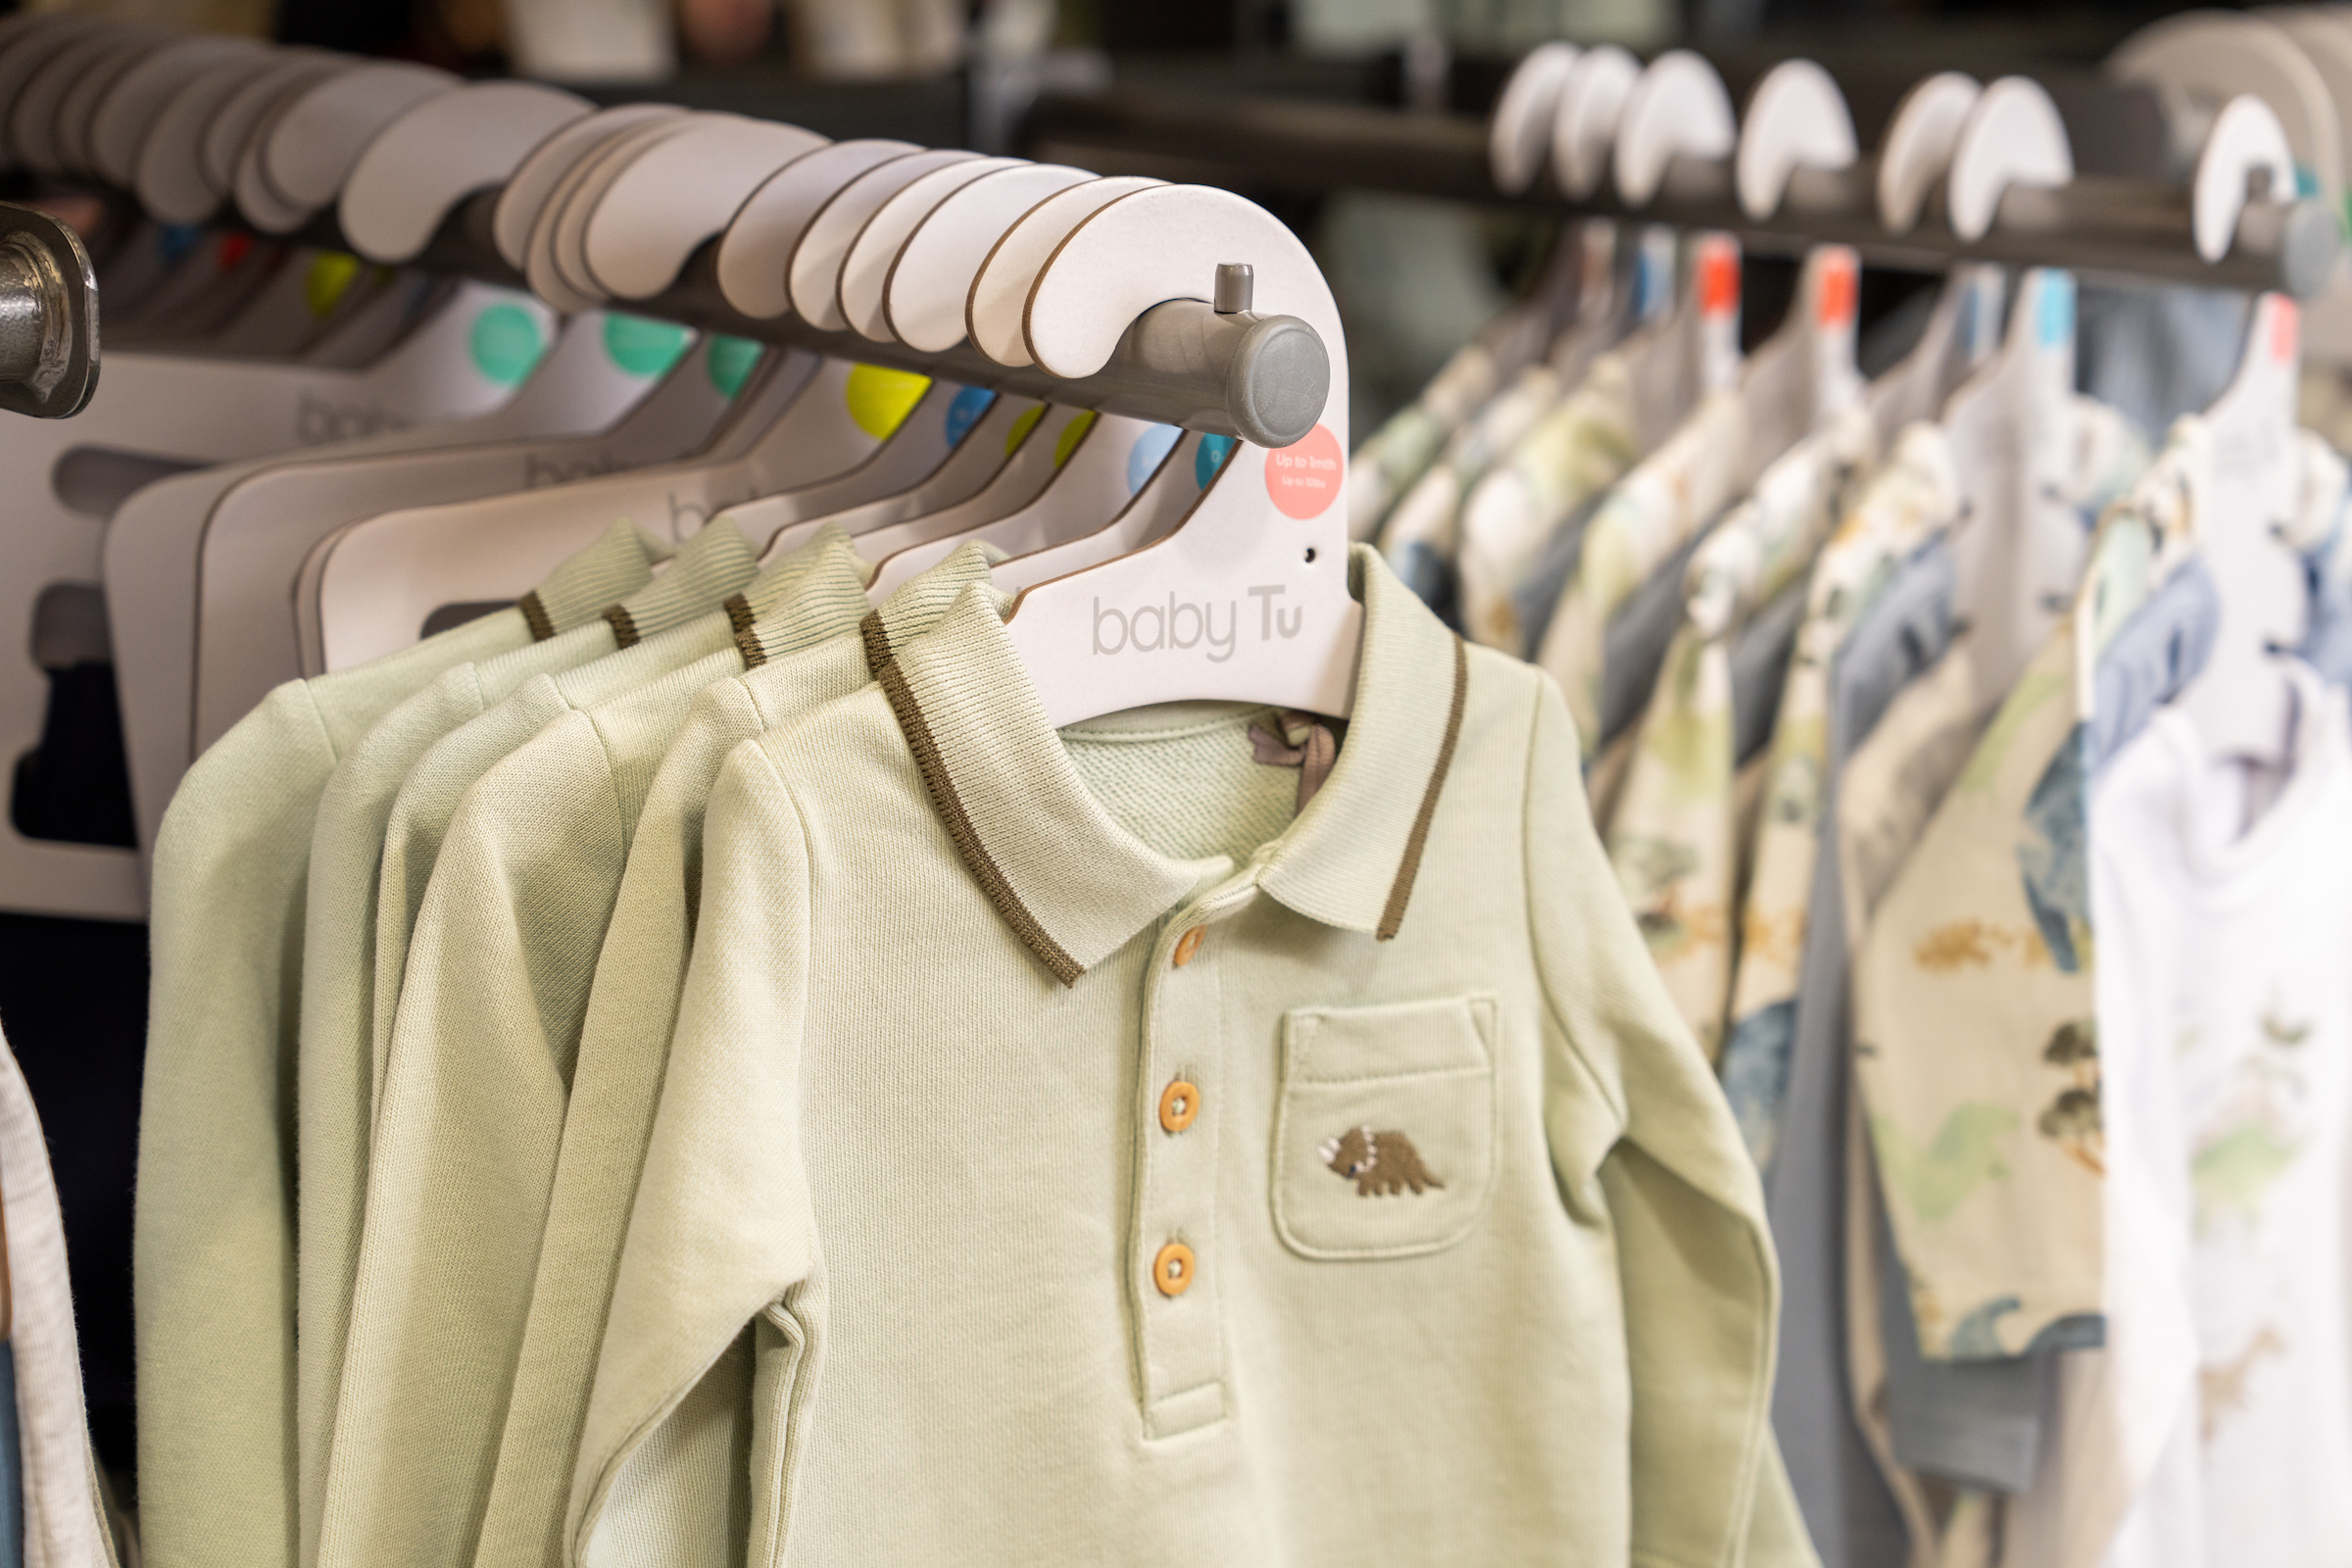 Tu Clothing introduces cardboard babywear hangers, saving 103